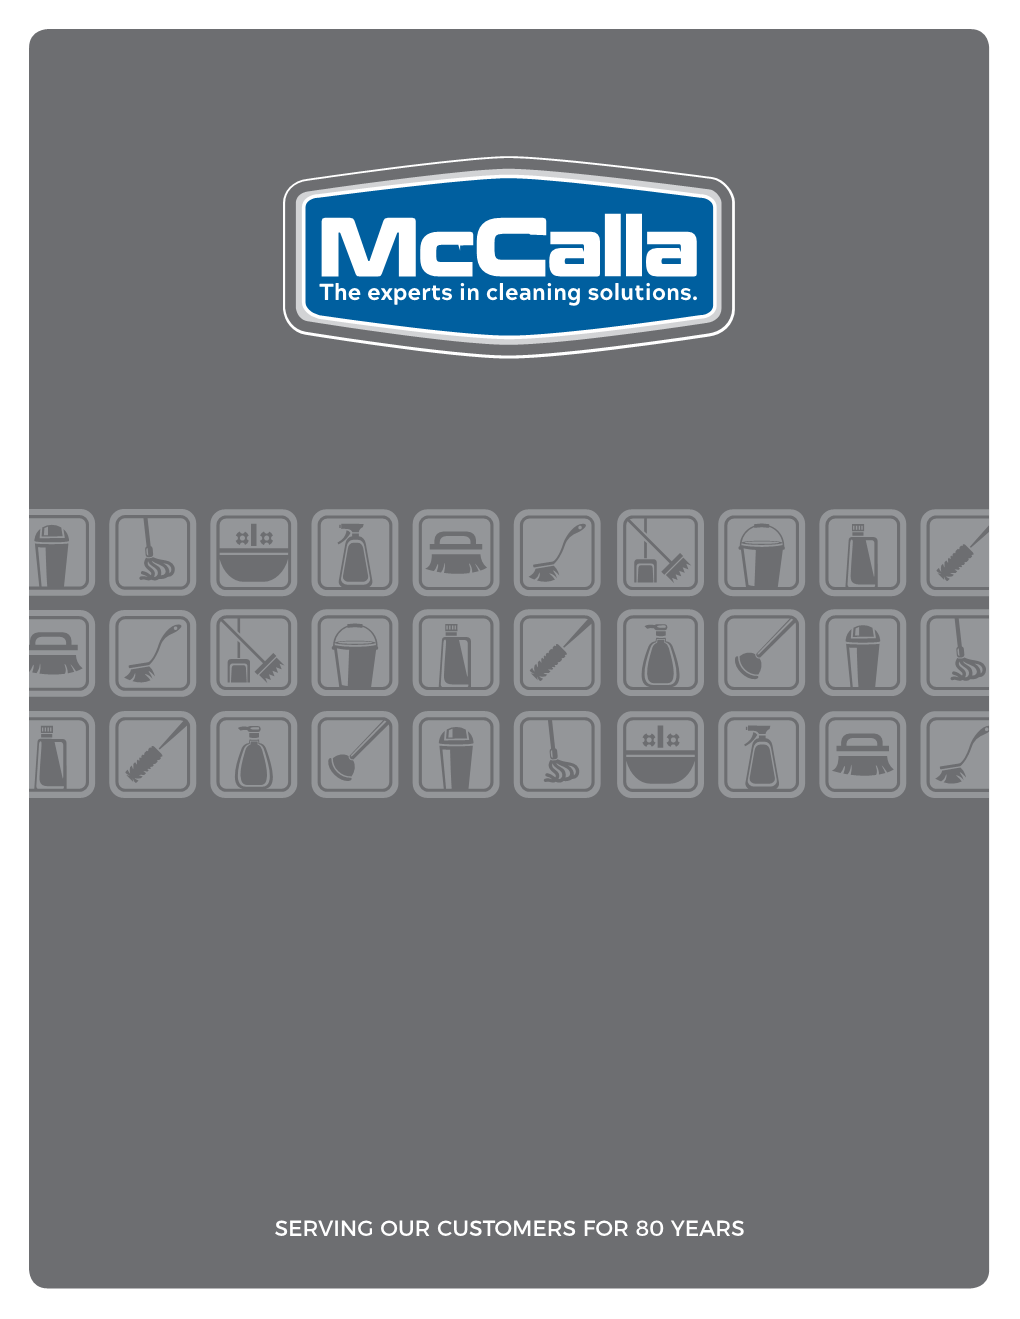 Mccalla Company Started As a Soap Manufacture in Los Angeles Called the Mccalla Soap Company Company